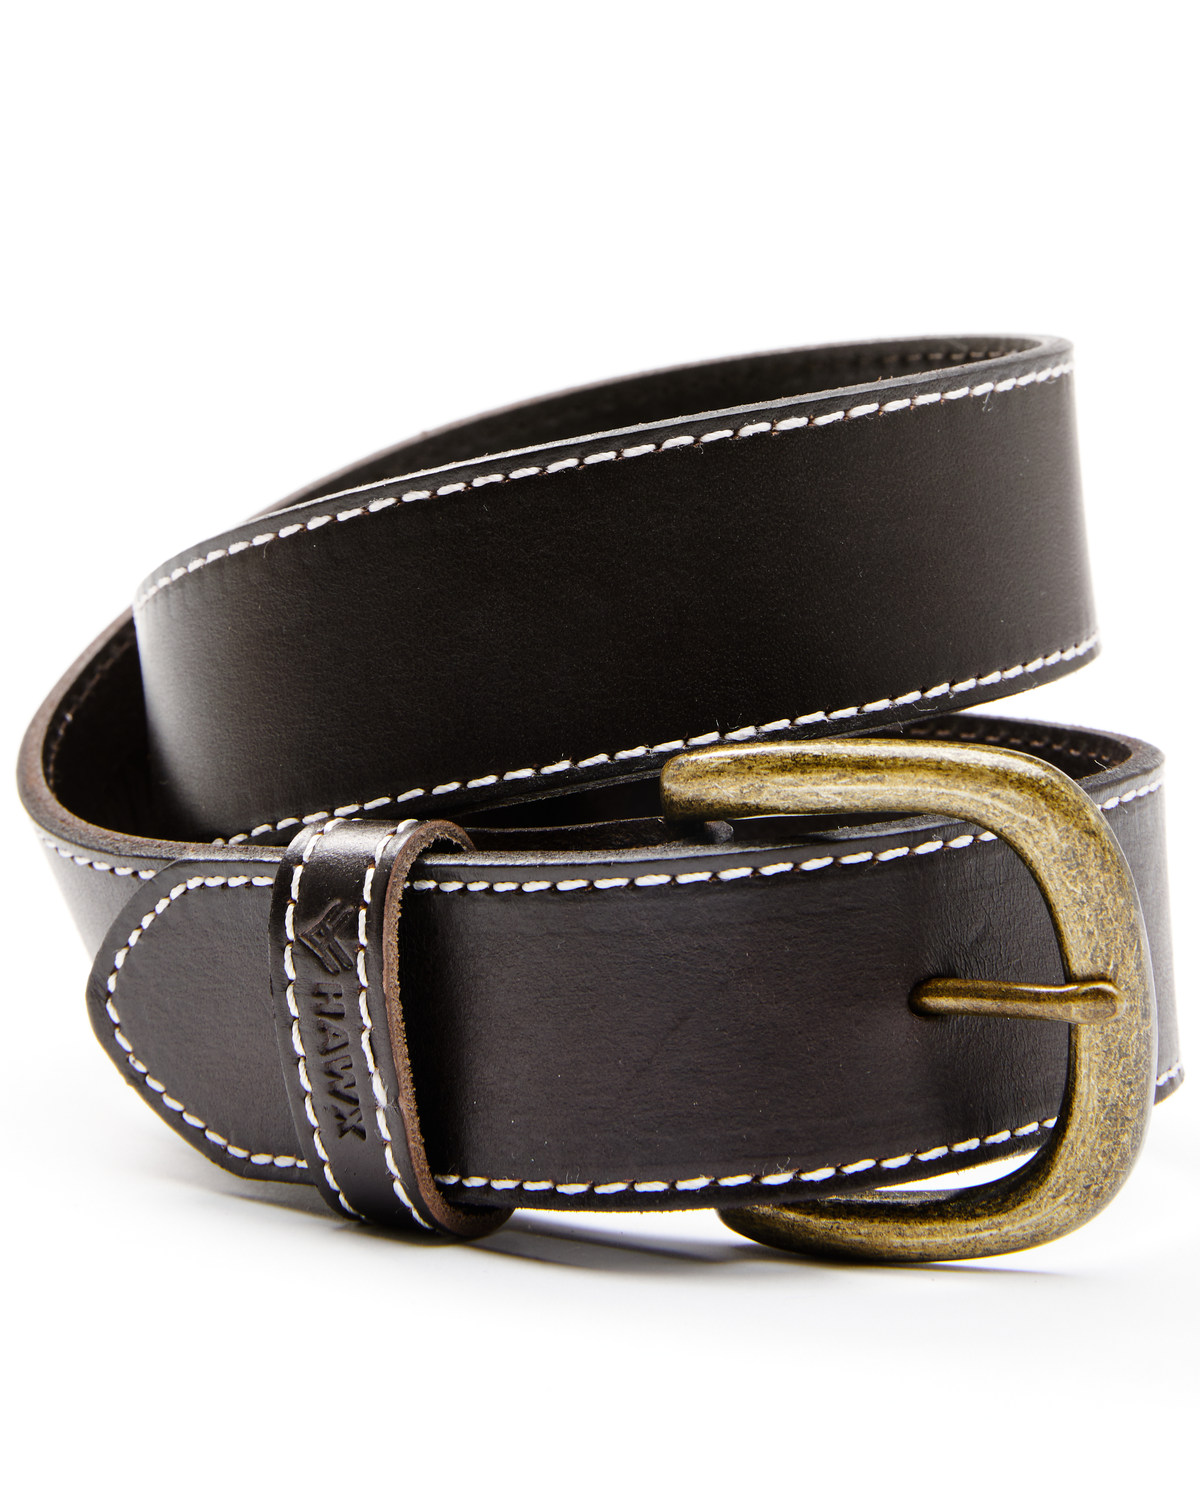 Hawx Men's Contrast Stitching Belt